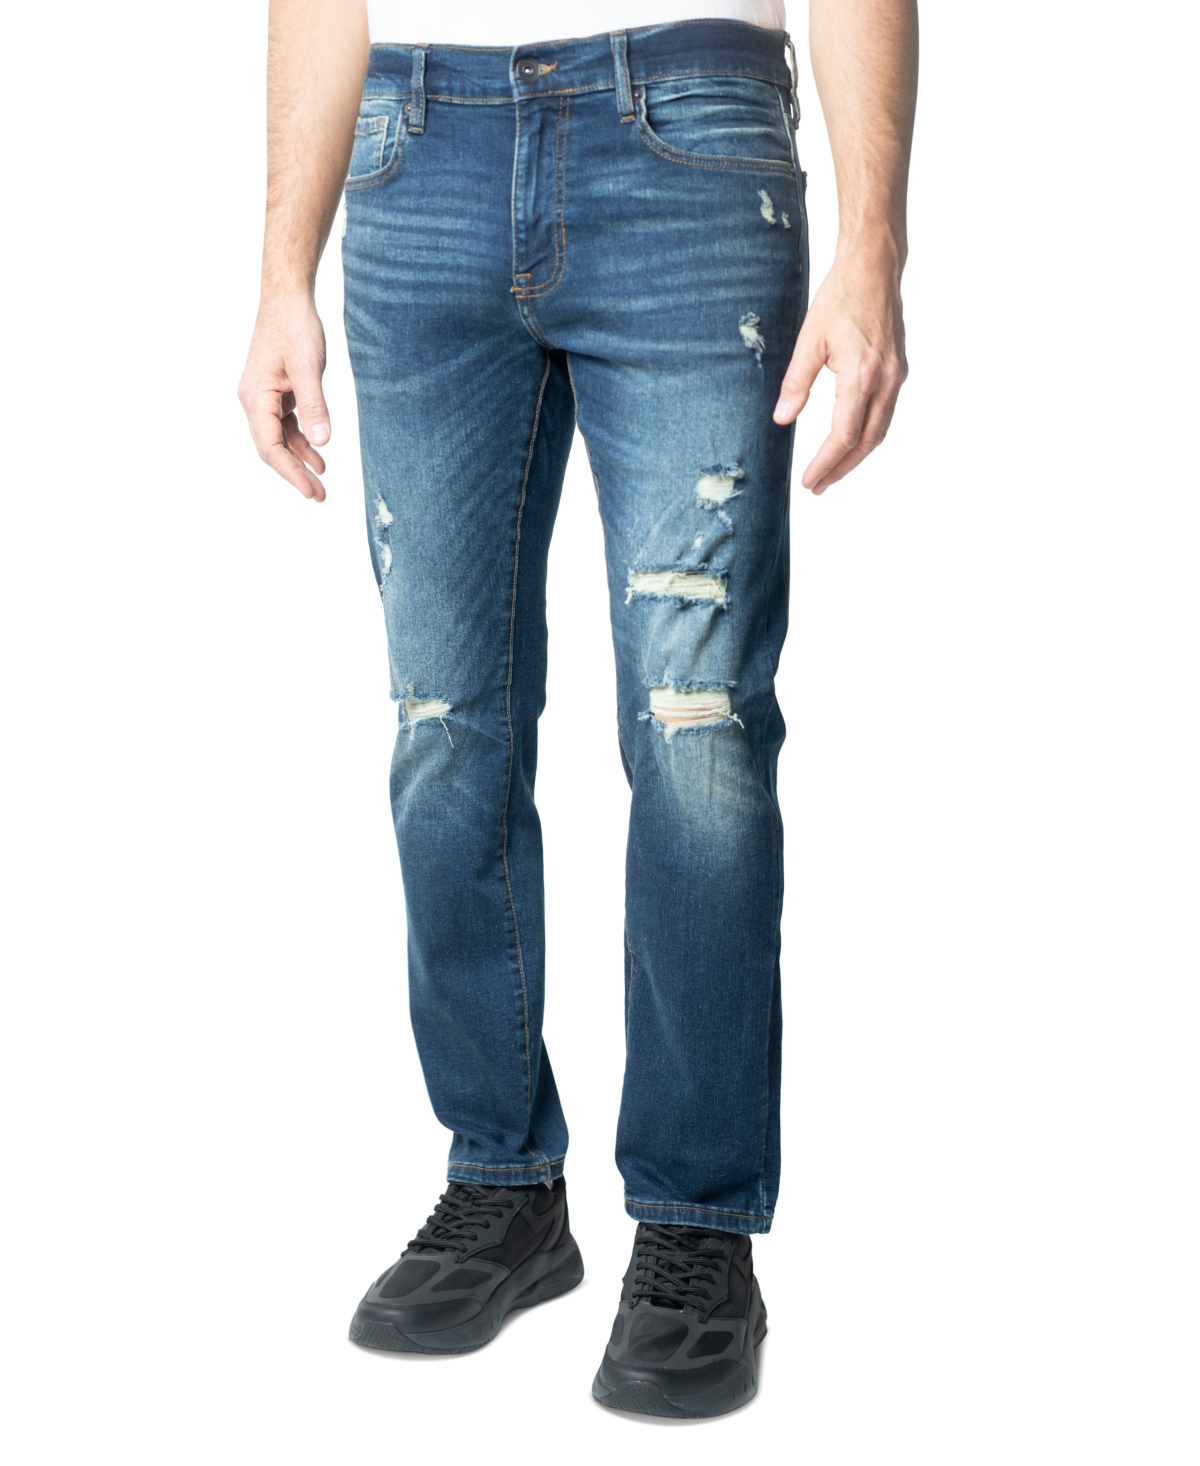 Men's Skinny-Fit Five-Pocket Patch Jeans - Landon